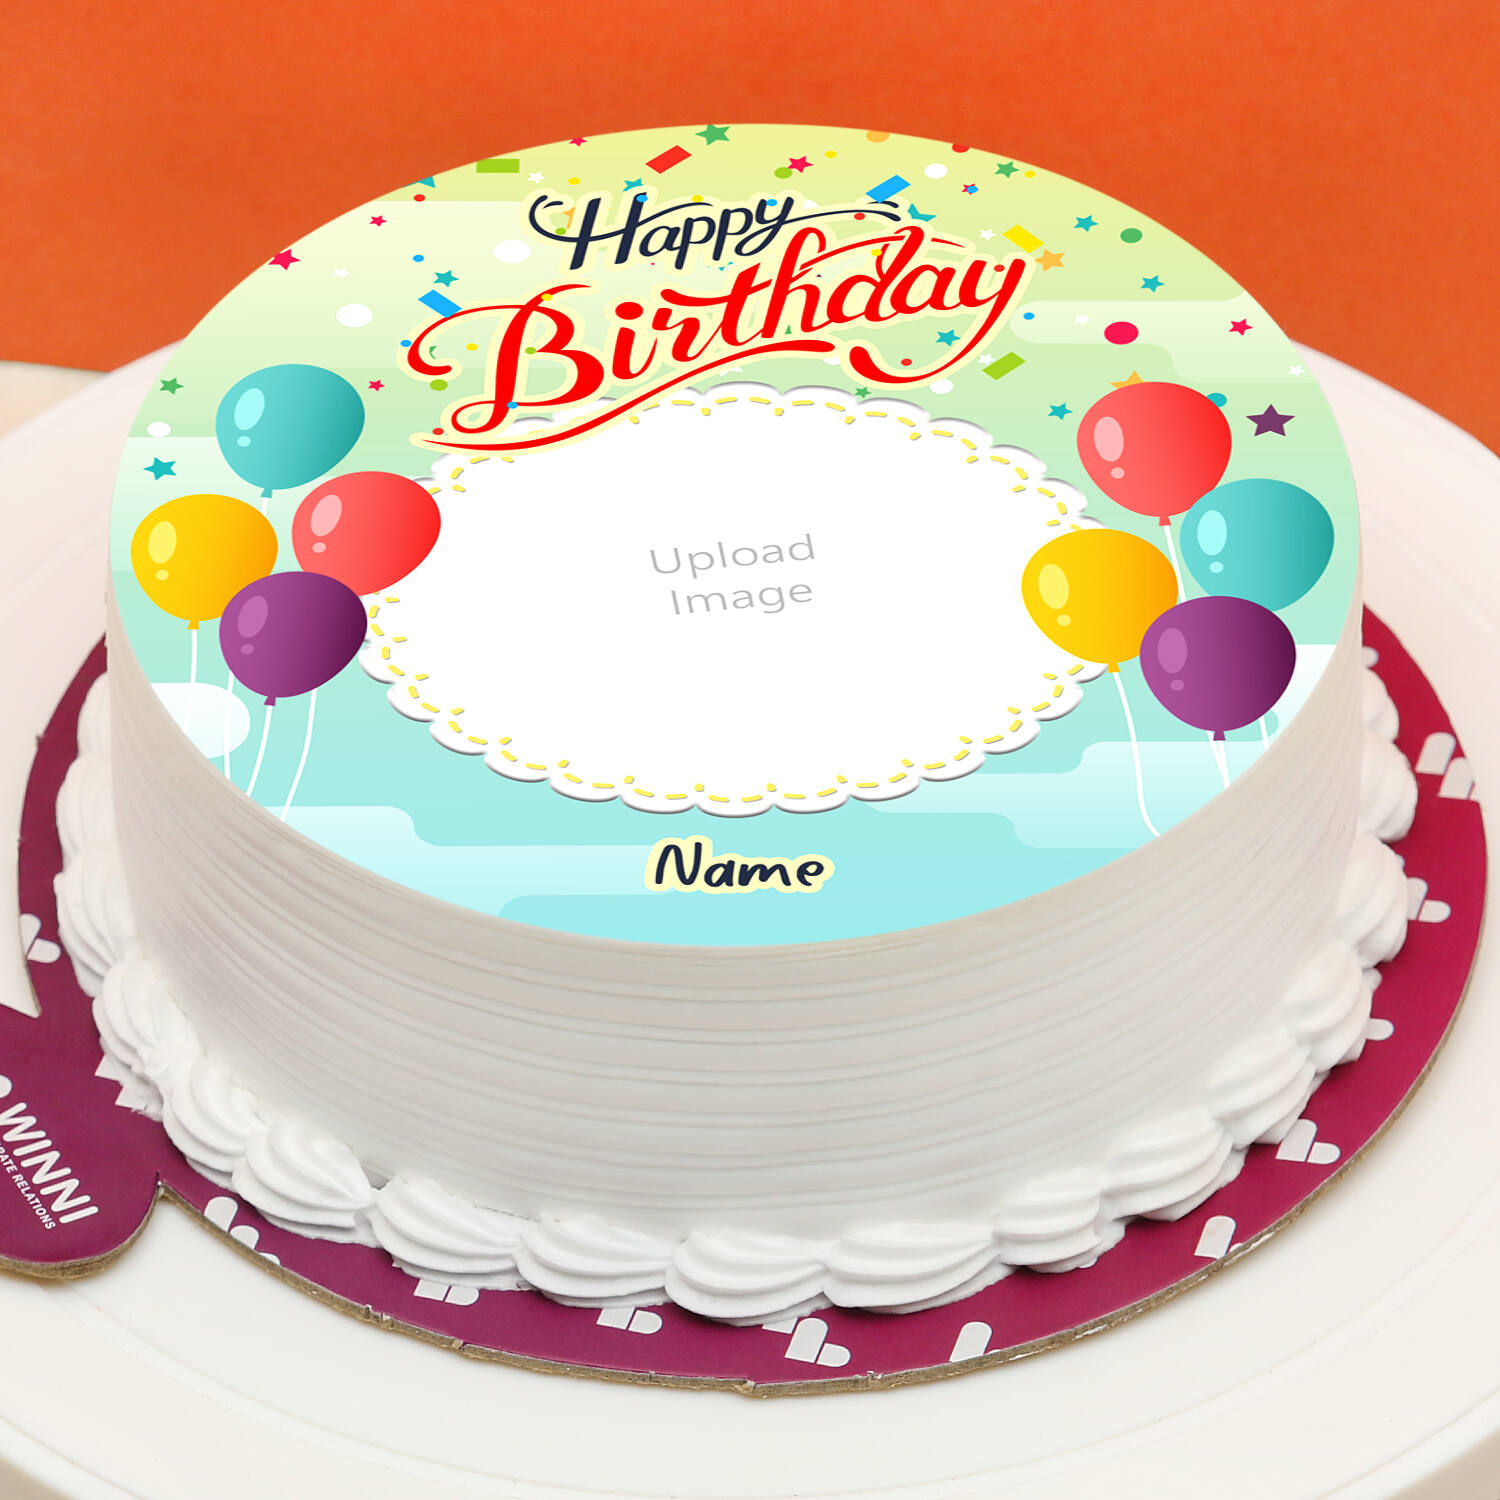 100+ HD Happy Birthday Saksham Cake Images And Shayari